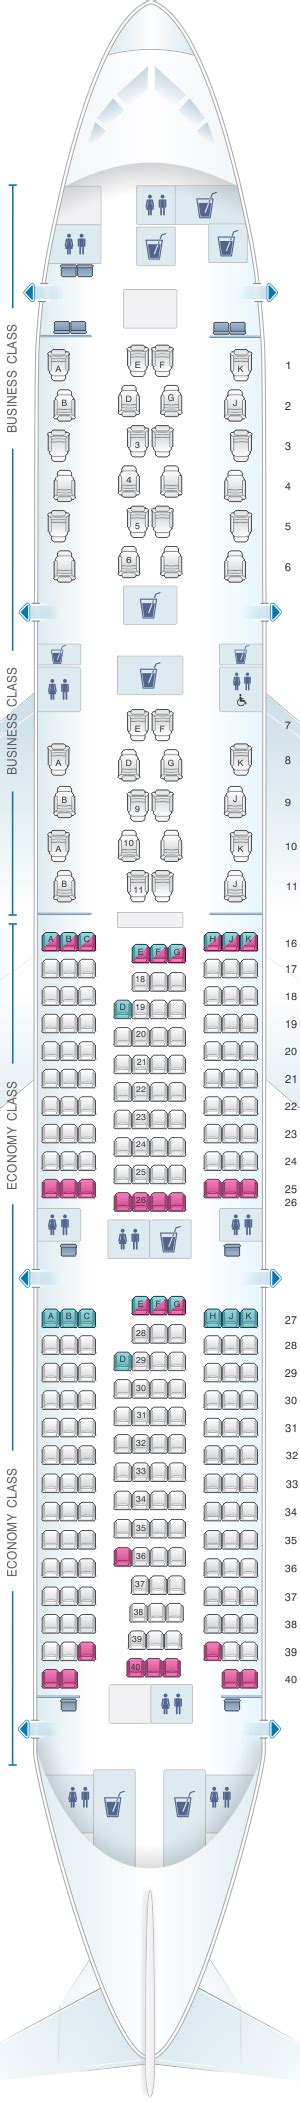 Qatar Airways Seating Chart 777 200lr Elcho Table